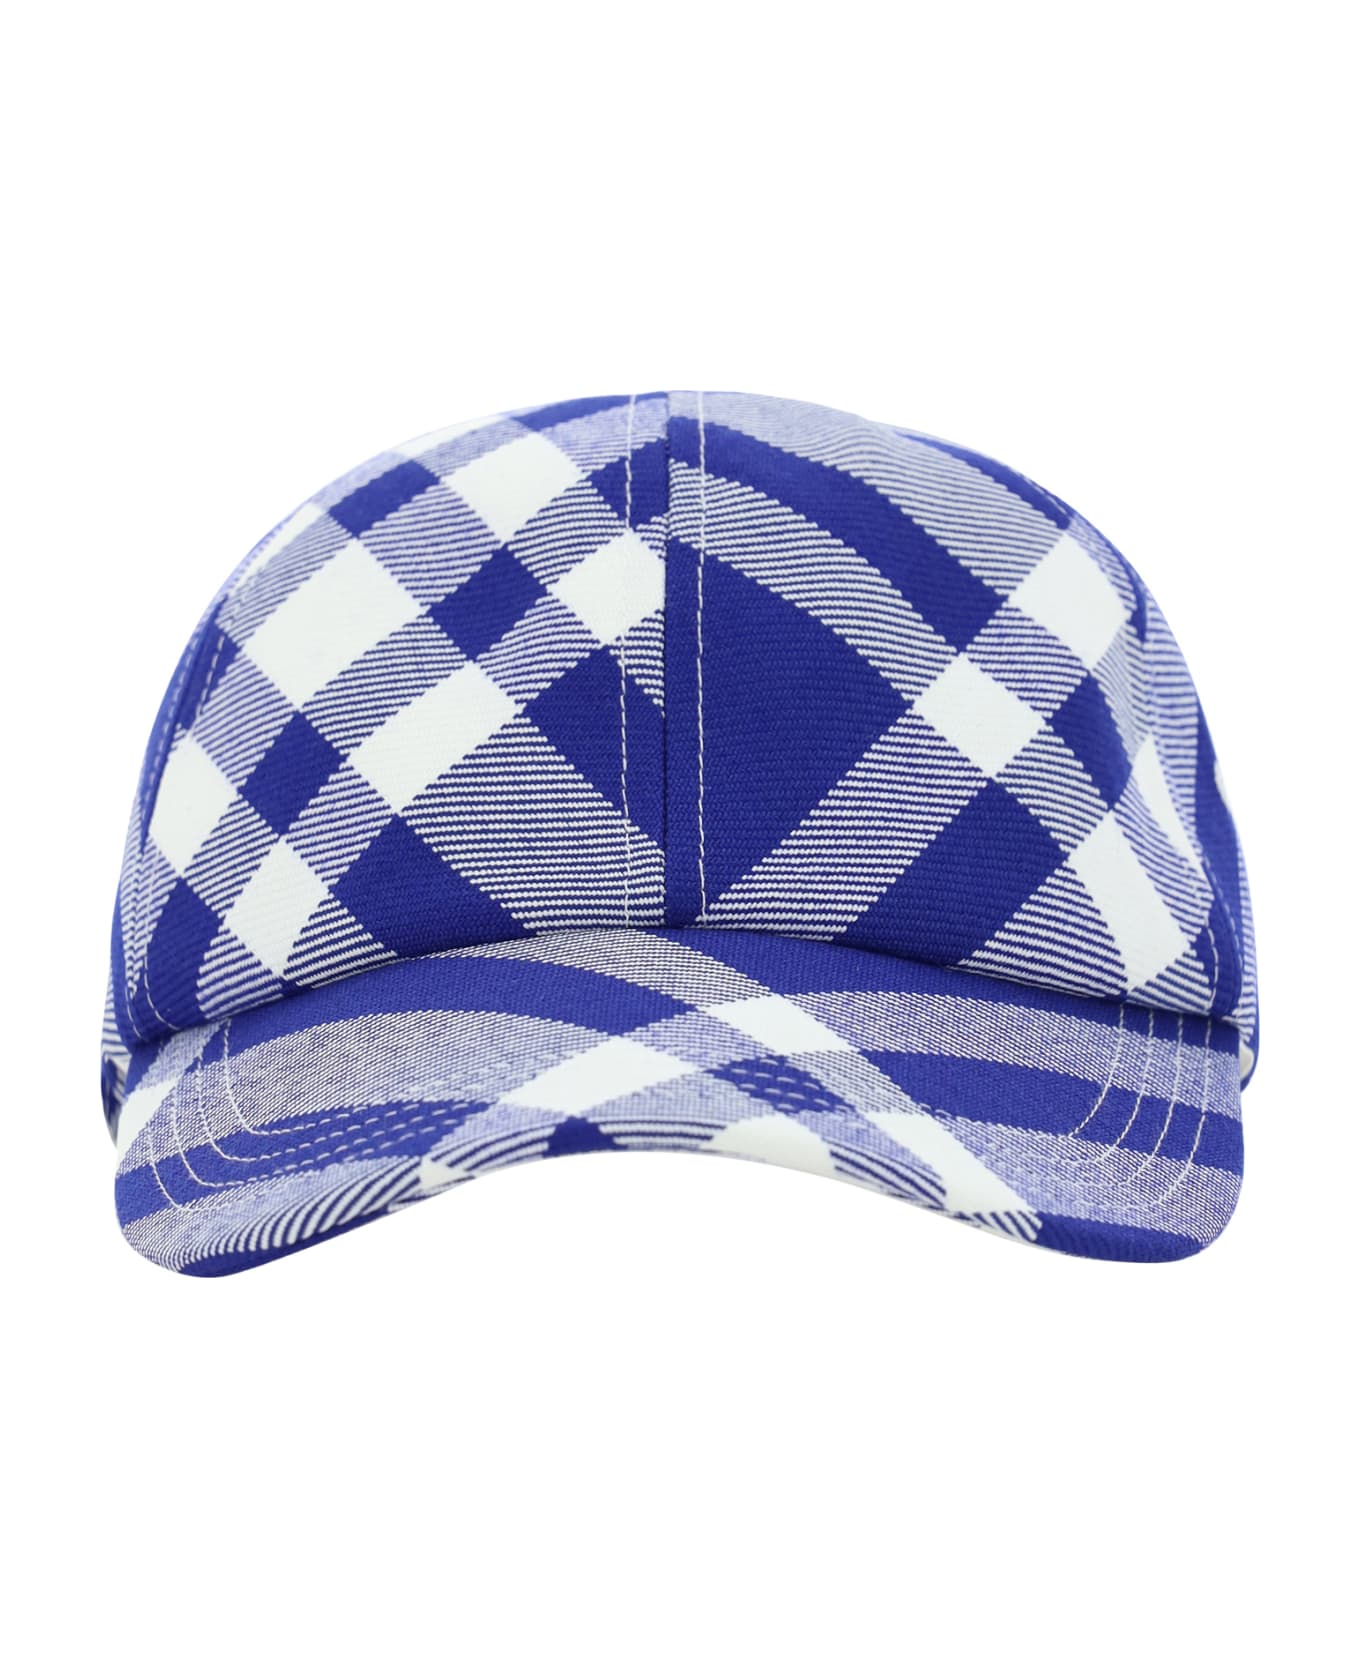 Burberry Baseball Hat - Blue